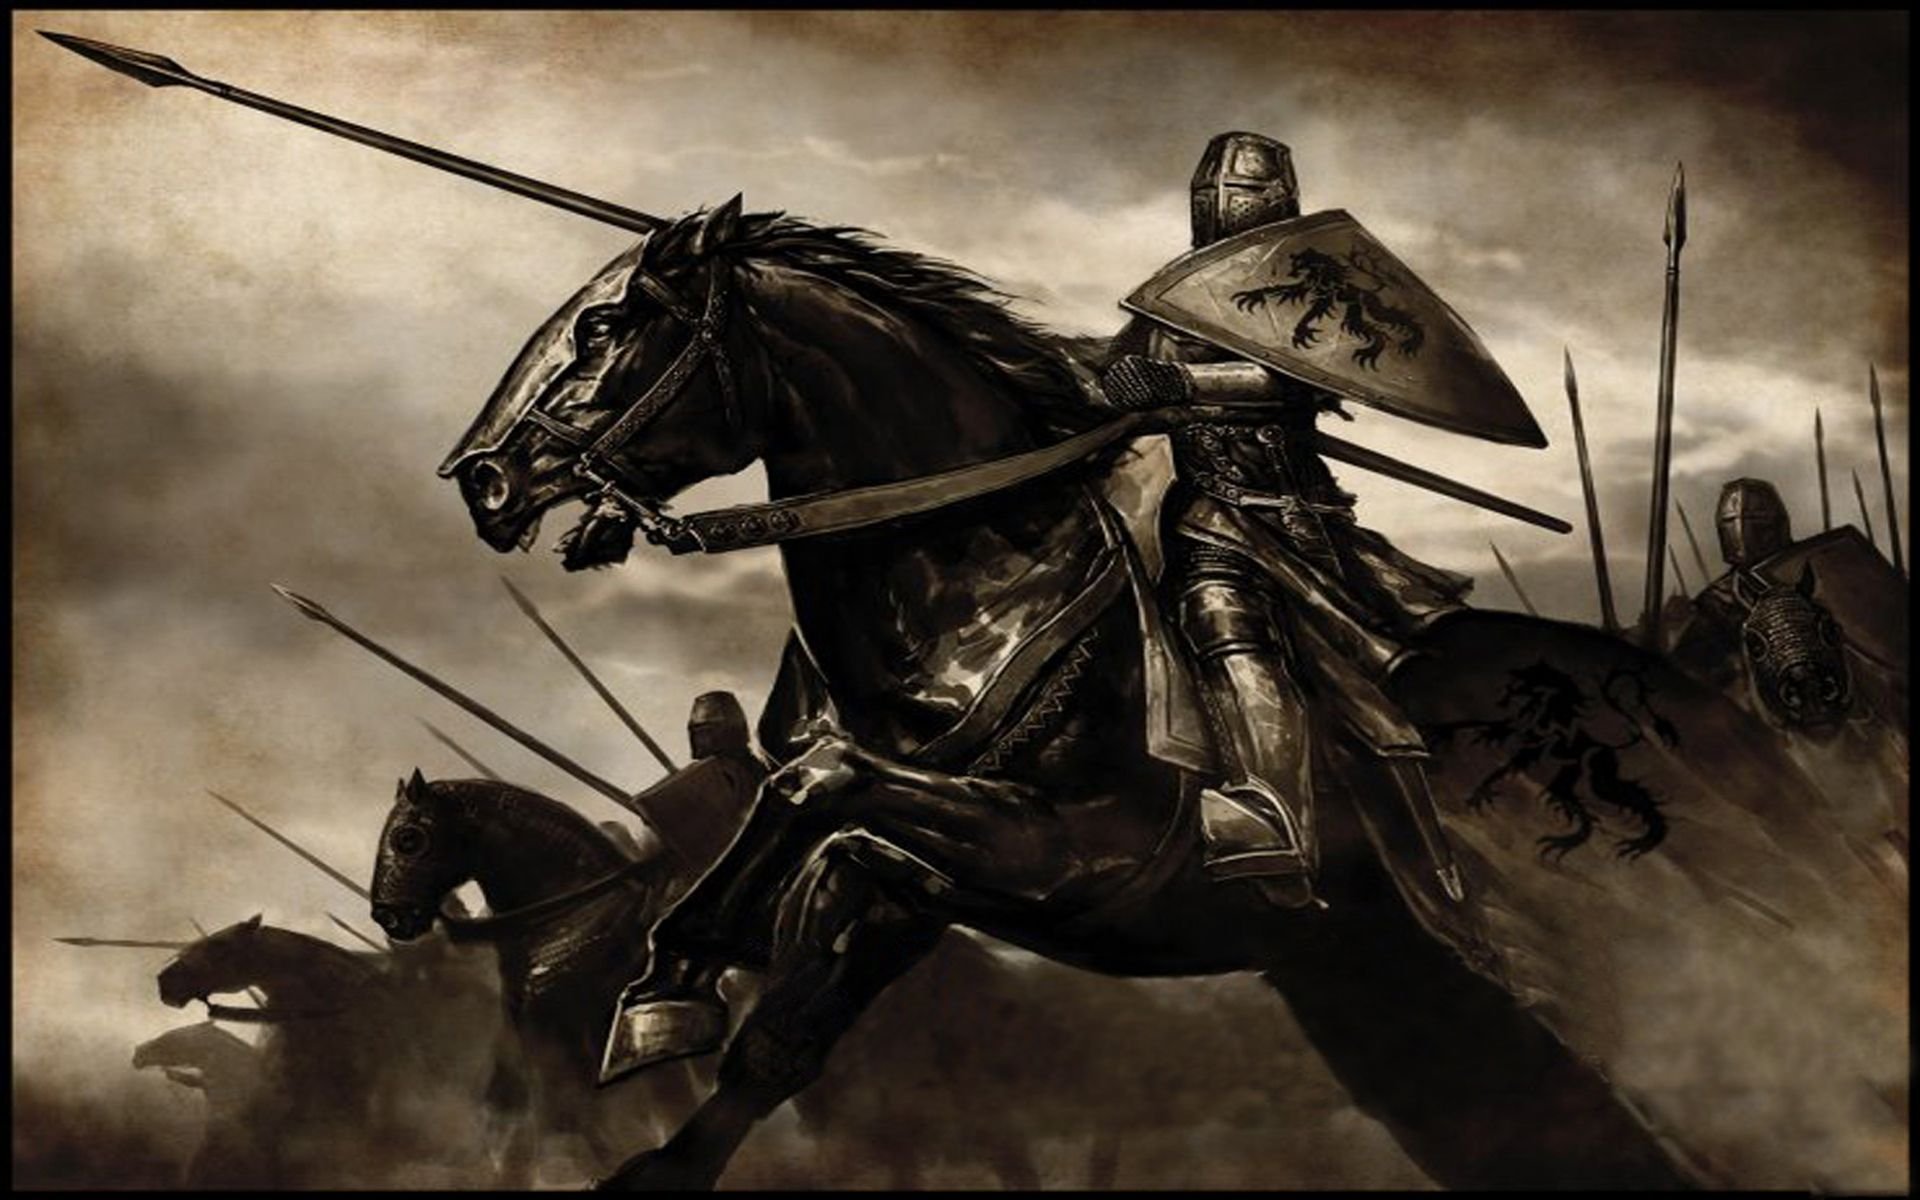 Mount Blade Warband Hd Wallpaper Background Image 1920x1200